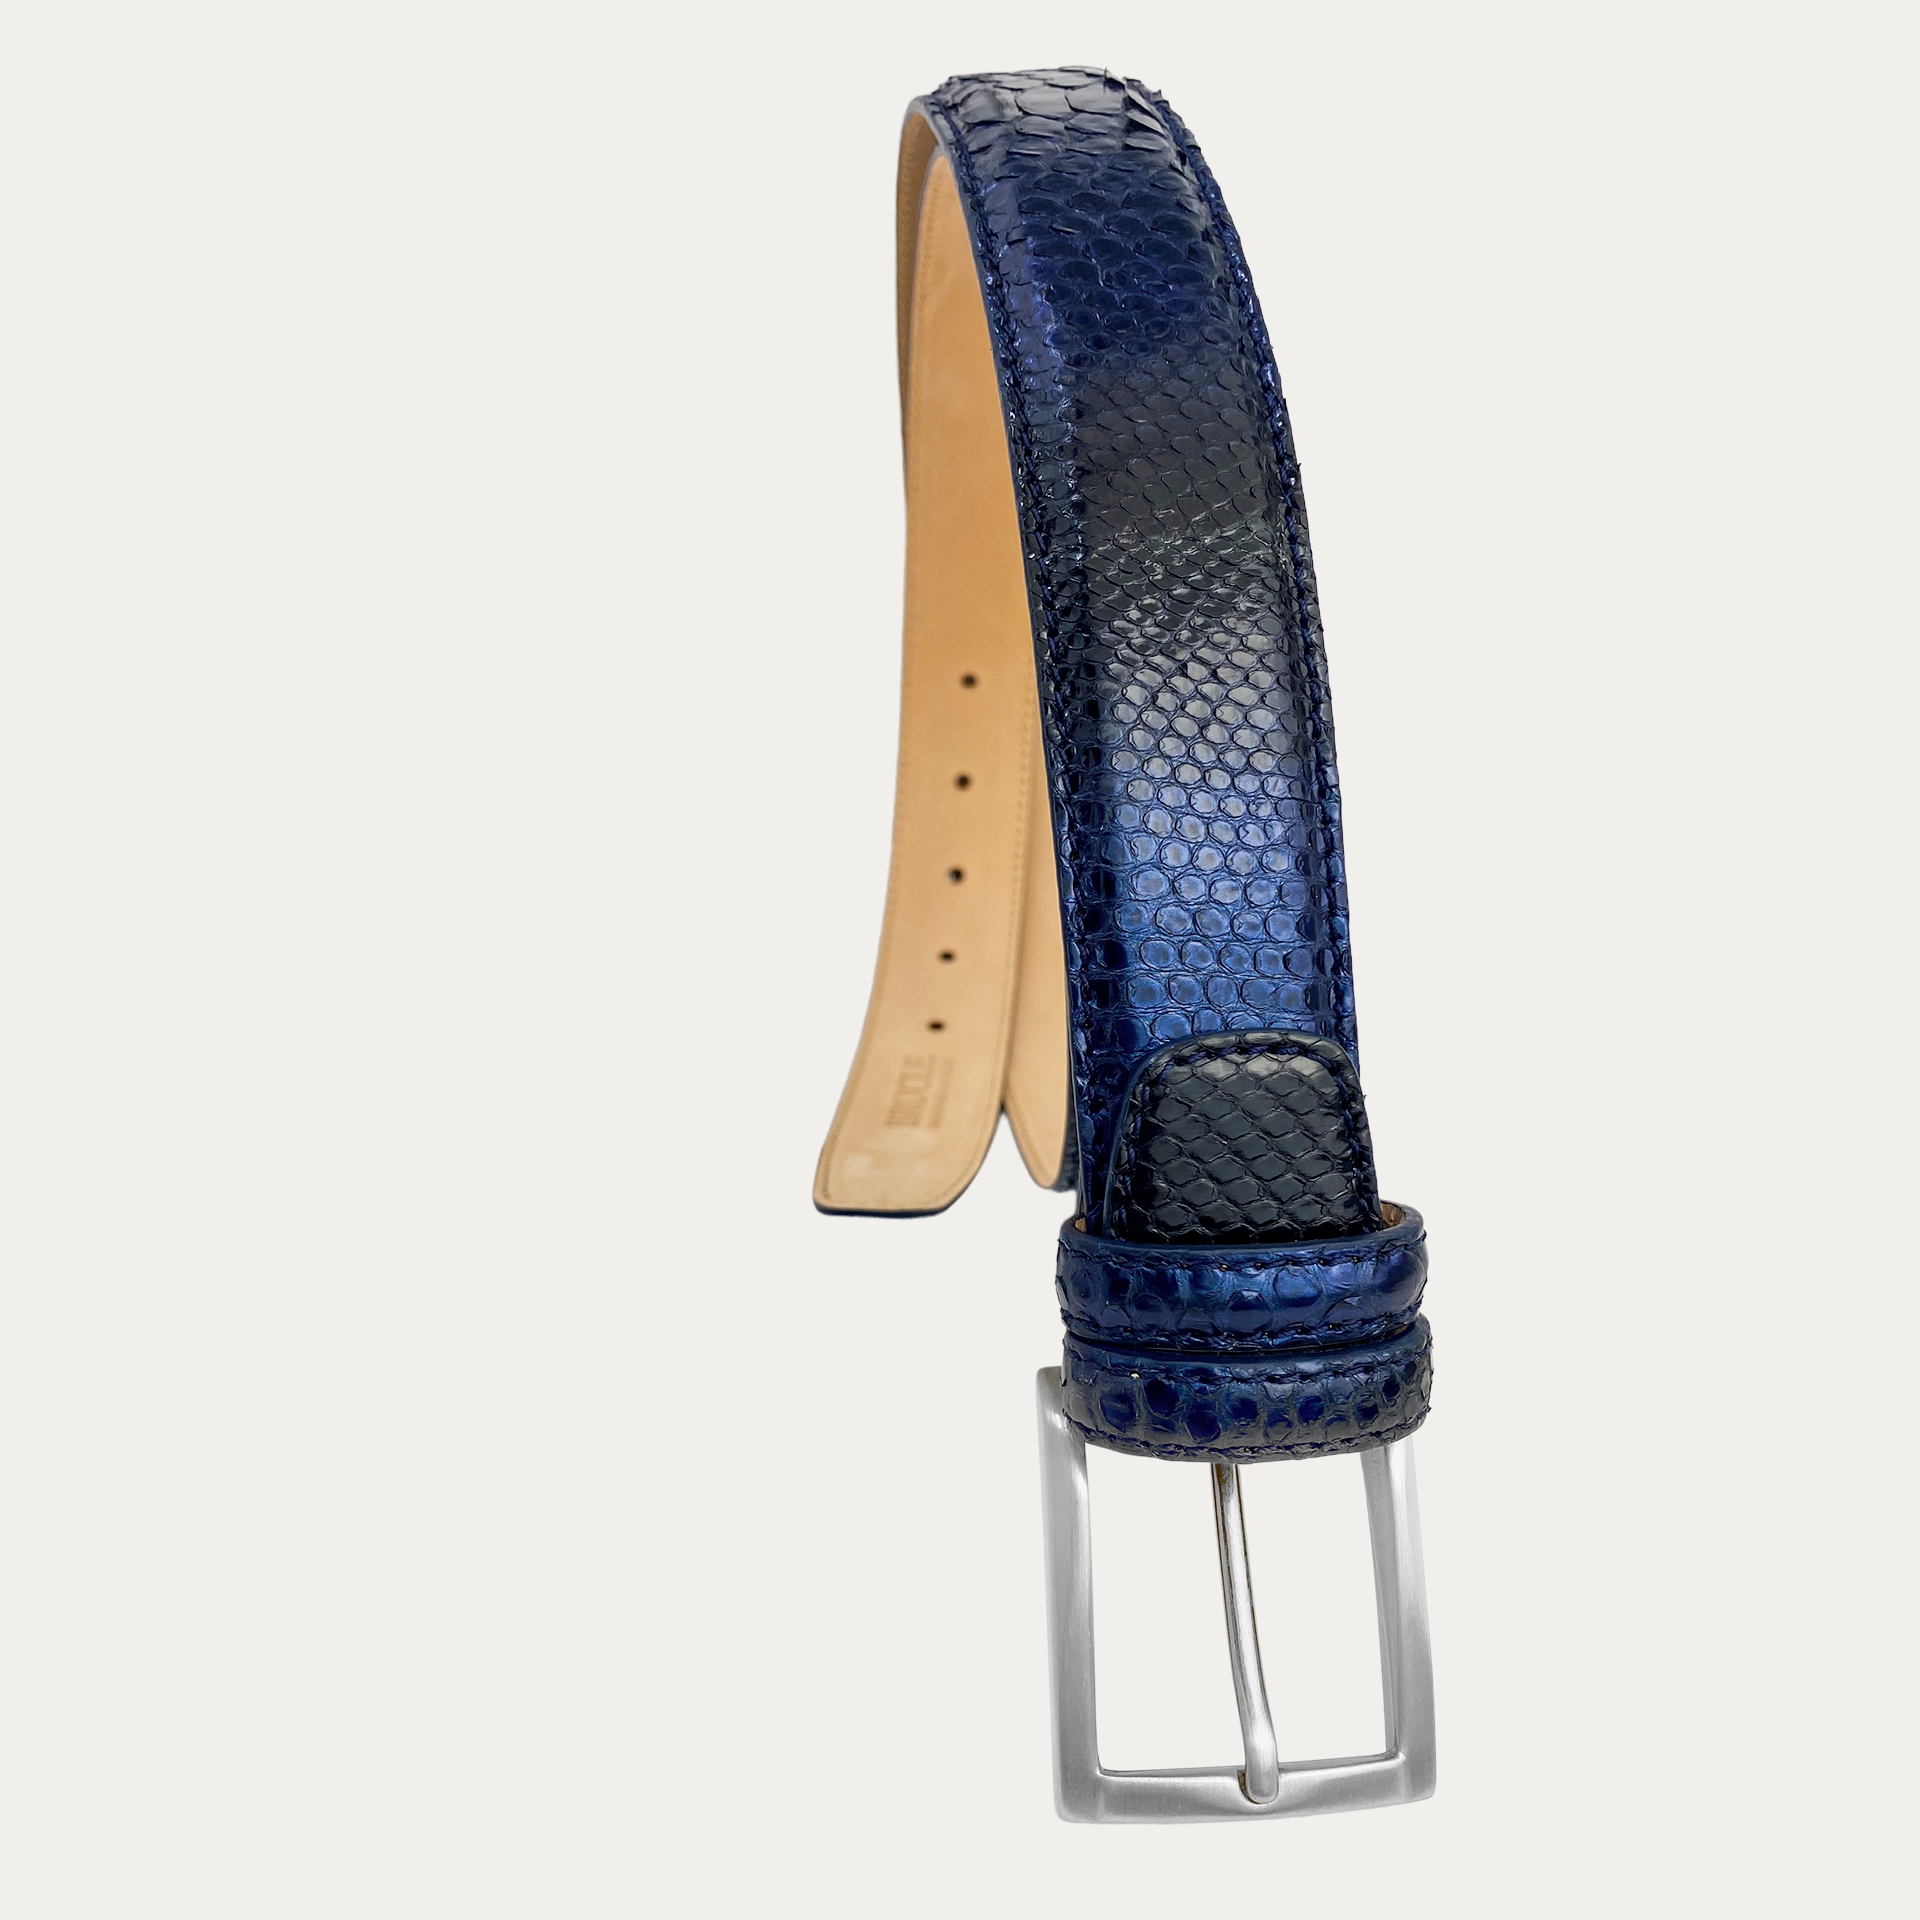 Metallic blue python leather belt